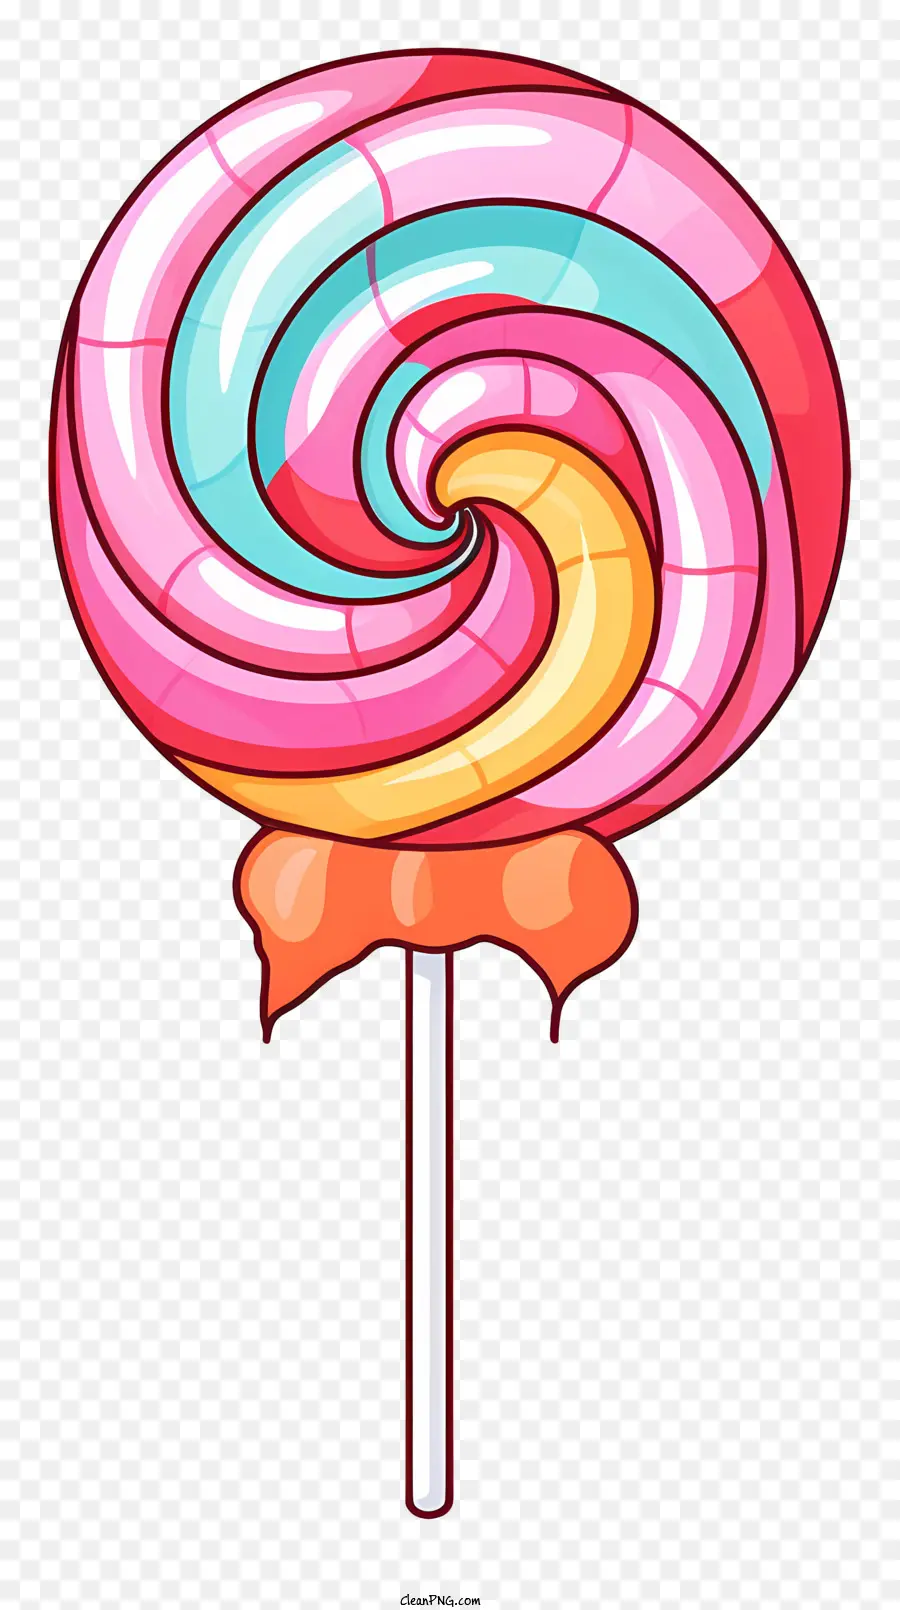 Lollipop Rainbow Swirl Colorfful Childhood Nostalgia Happiness - Lollipop colorato simboleggia la felicità e la nostalgia infantile